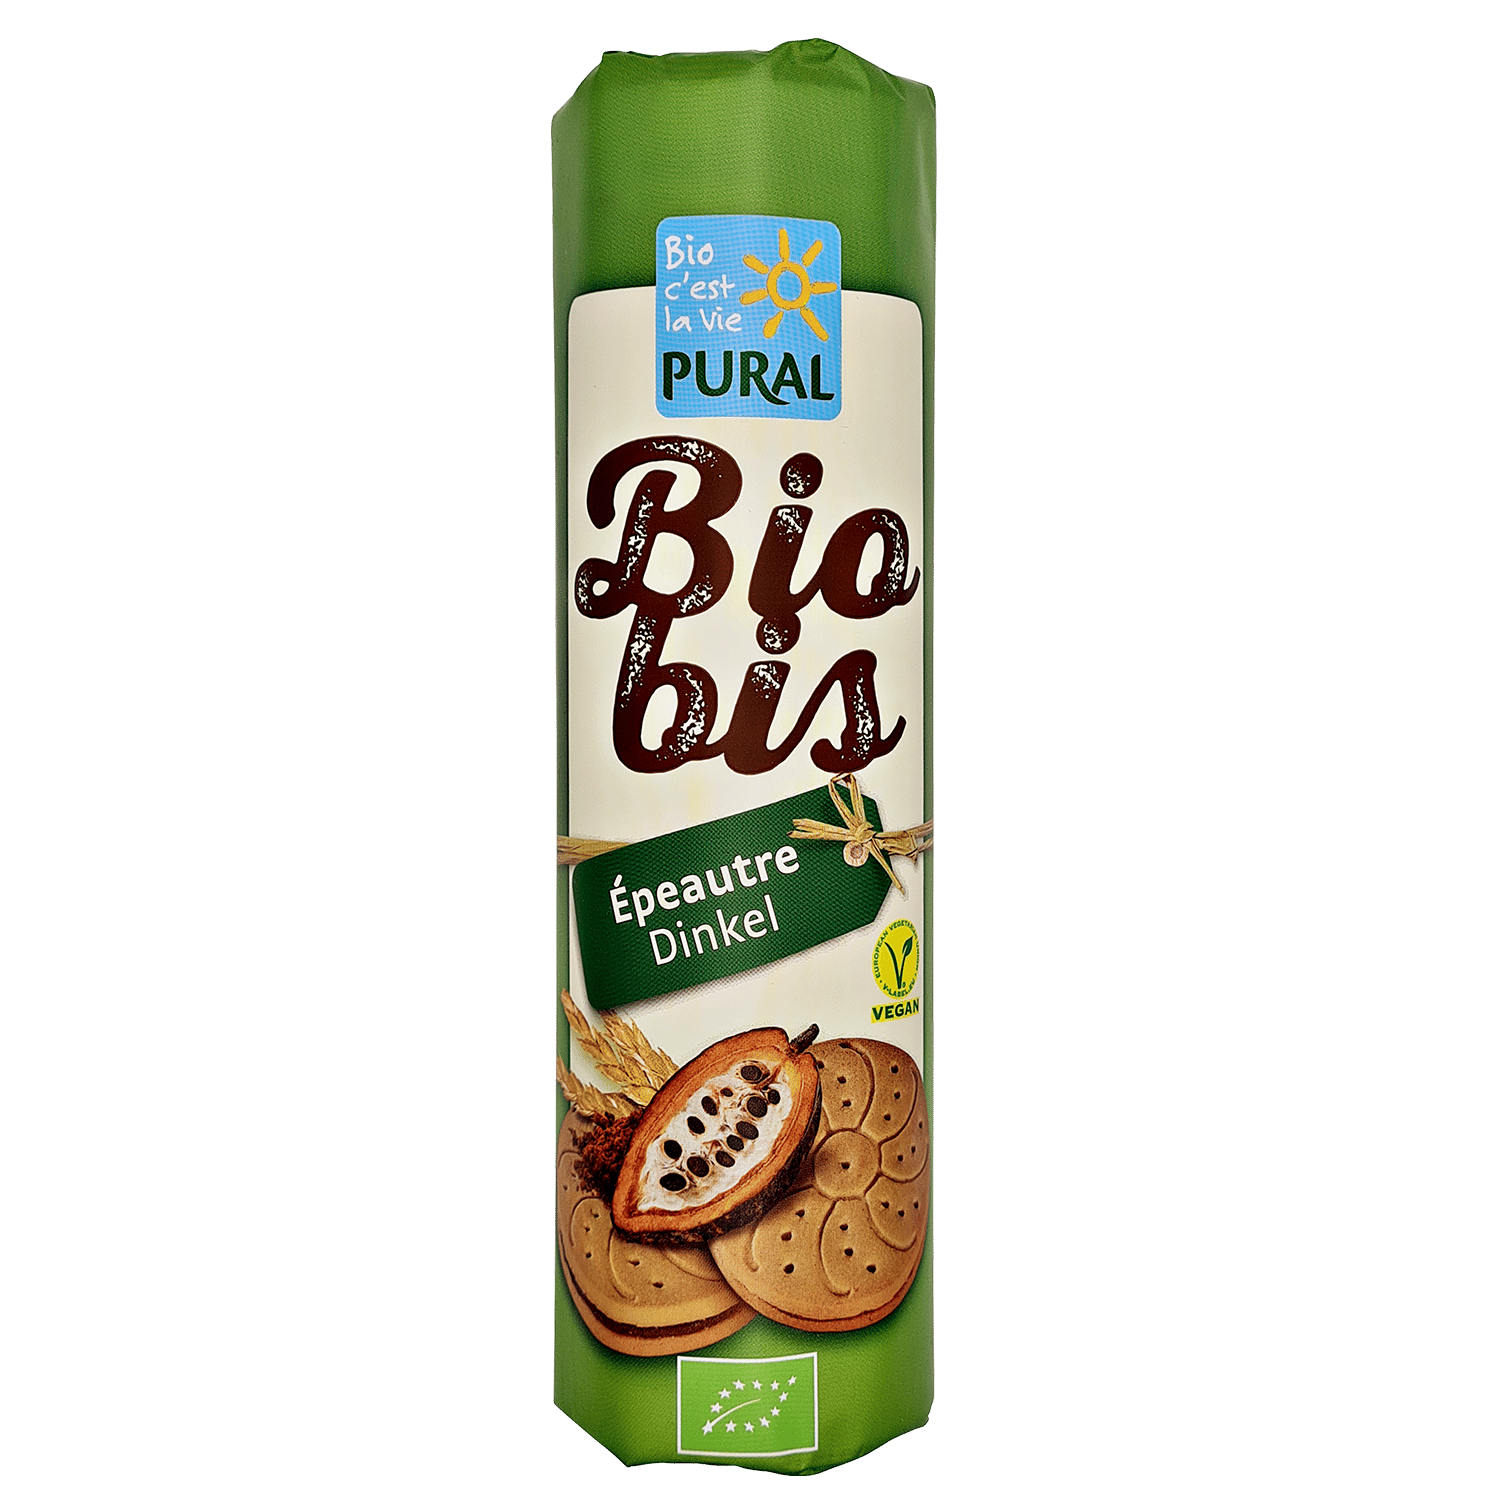 Biobis Spelt Double Biscuits Choc, Organic, 300g